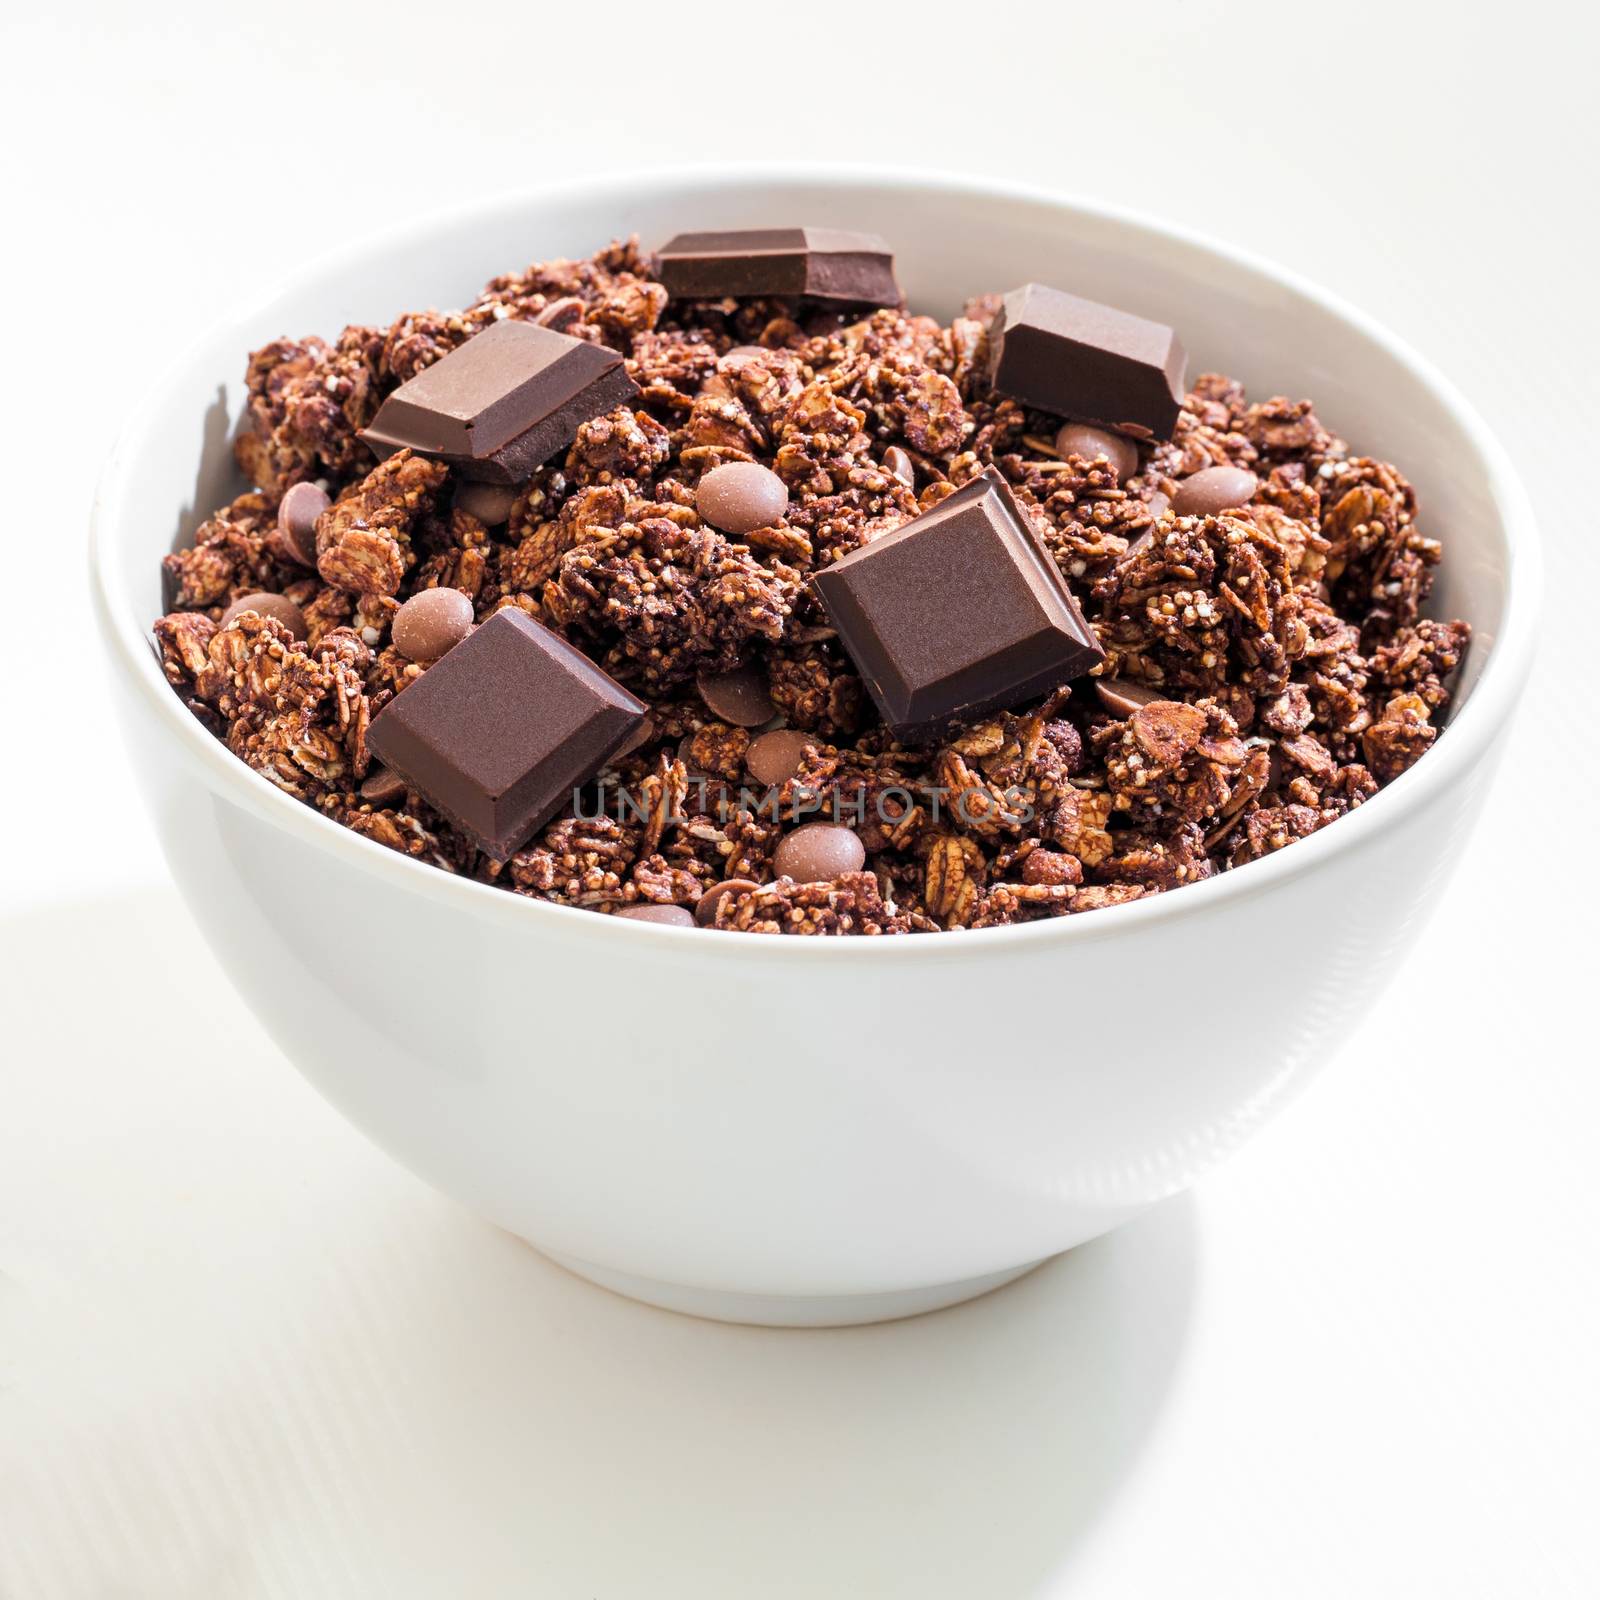 Bowl of chocolate muesli. by karelnoppe